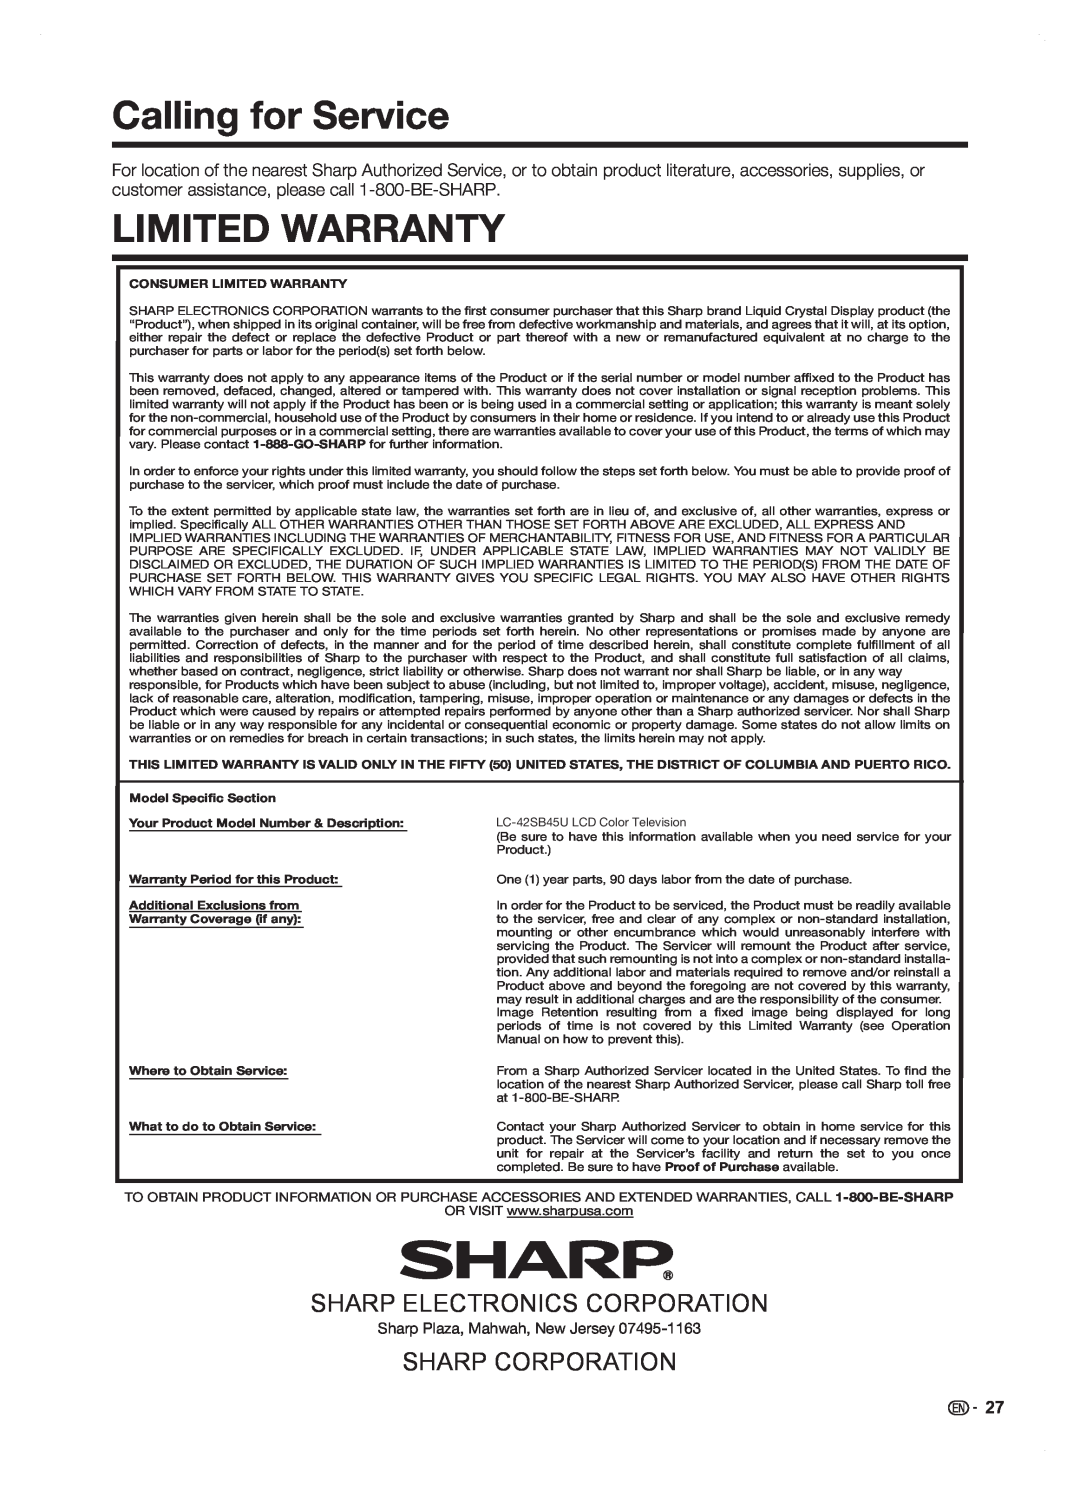 Sharp LC42SB45U operation manual Calling for Service, Limited Warranty, Sharp Electronics Corporation, Sharp Corporation 